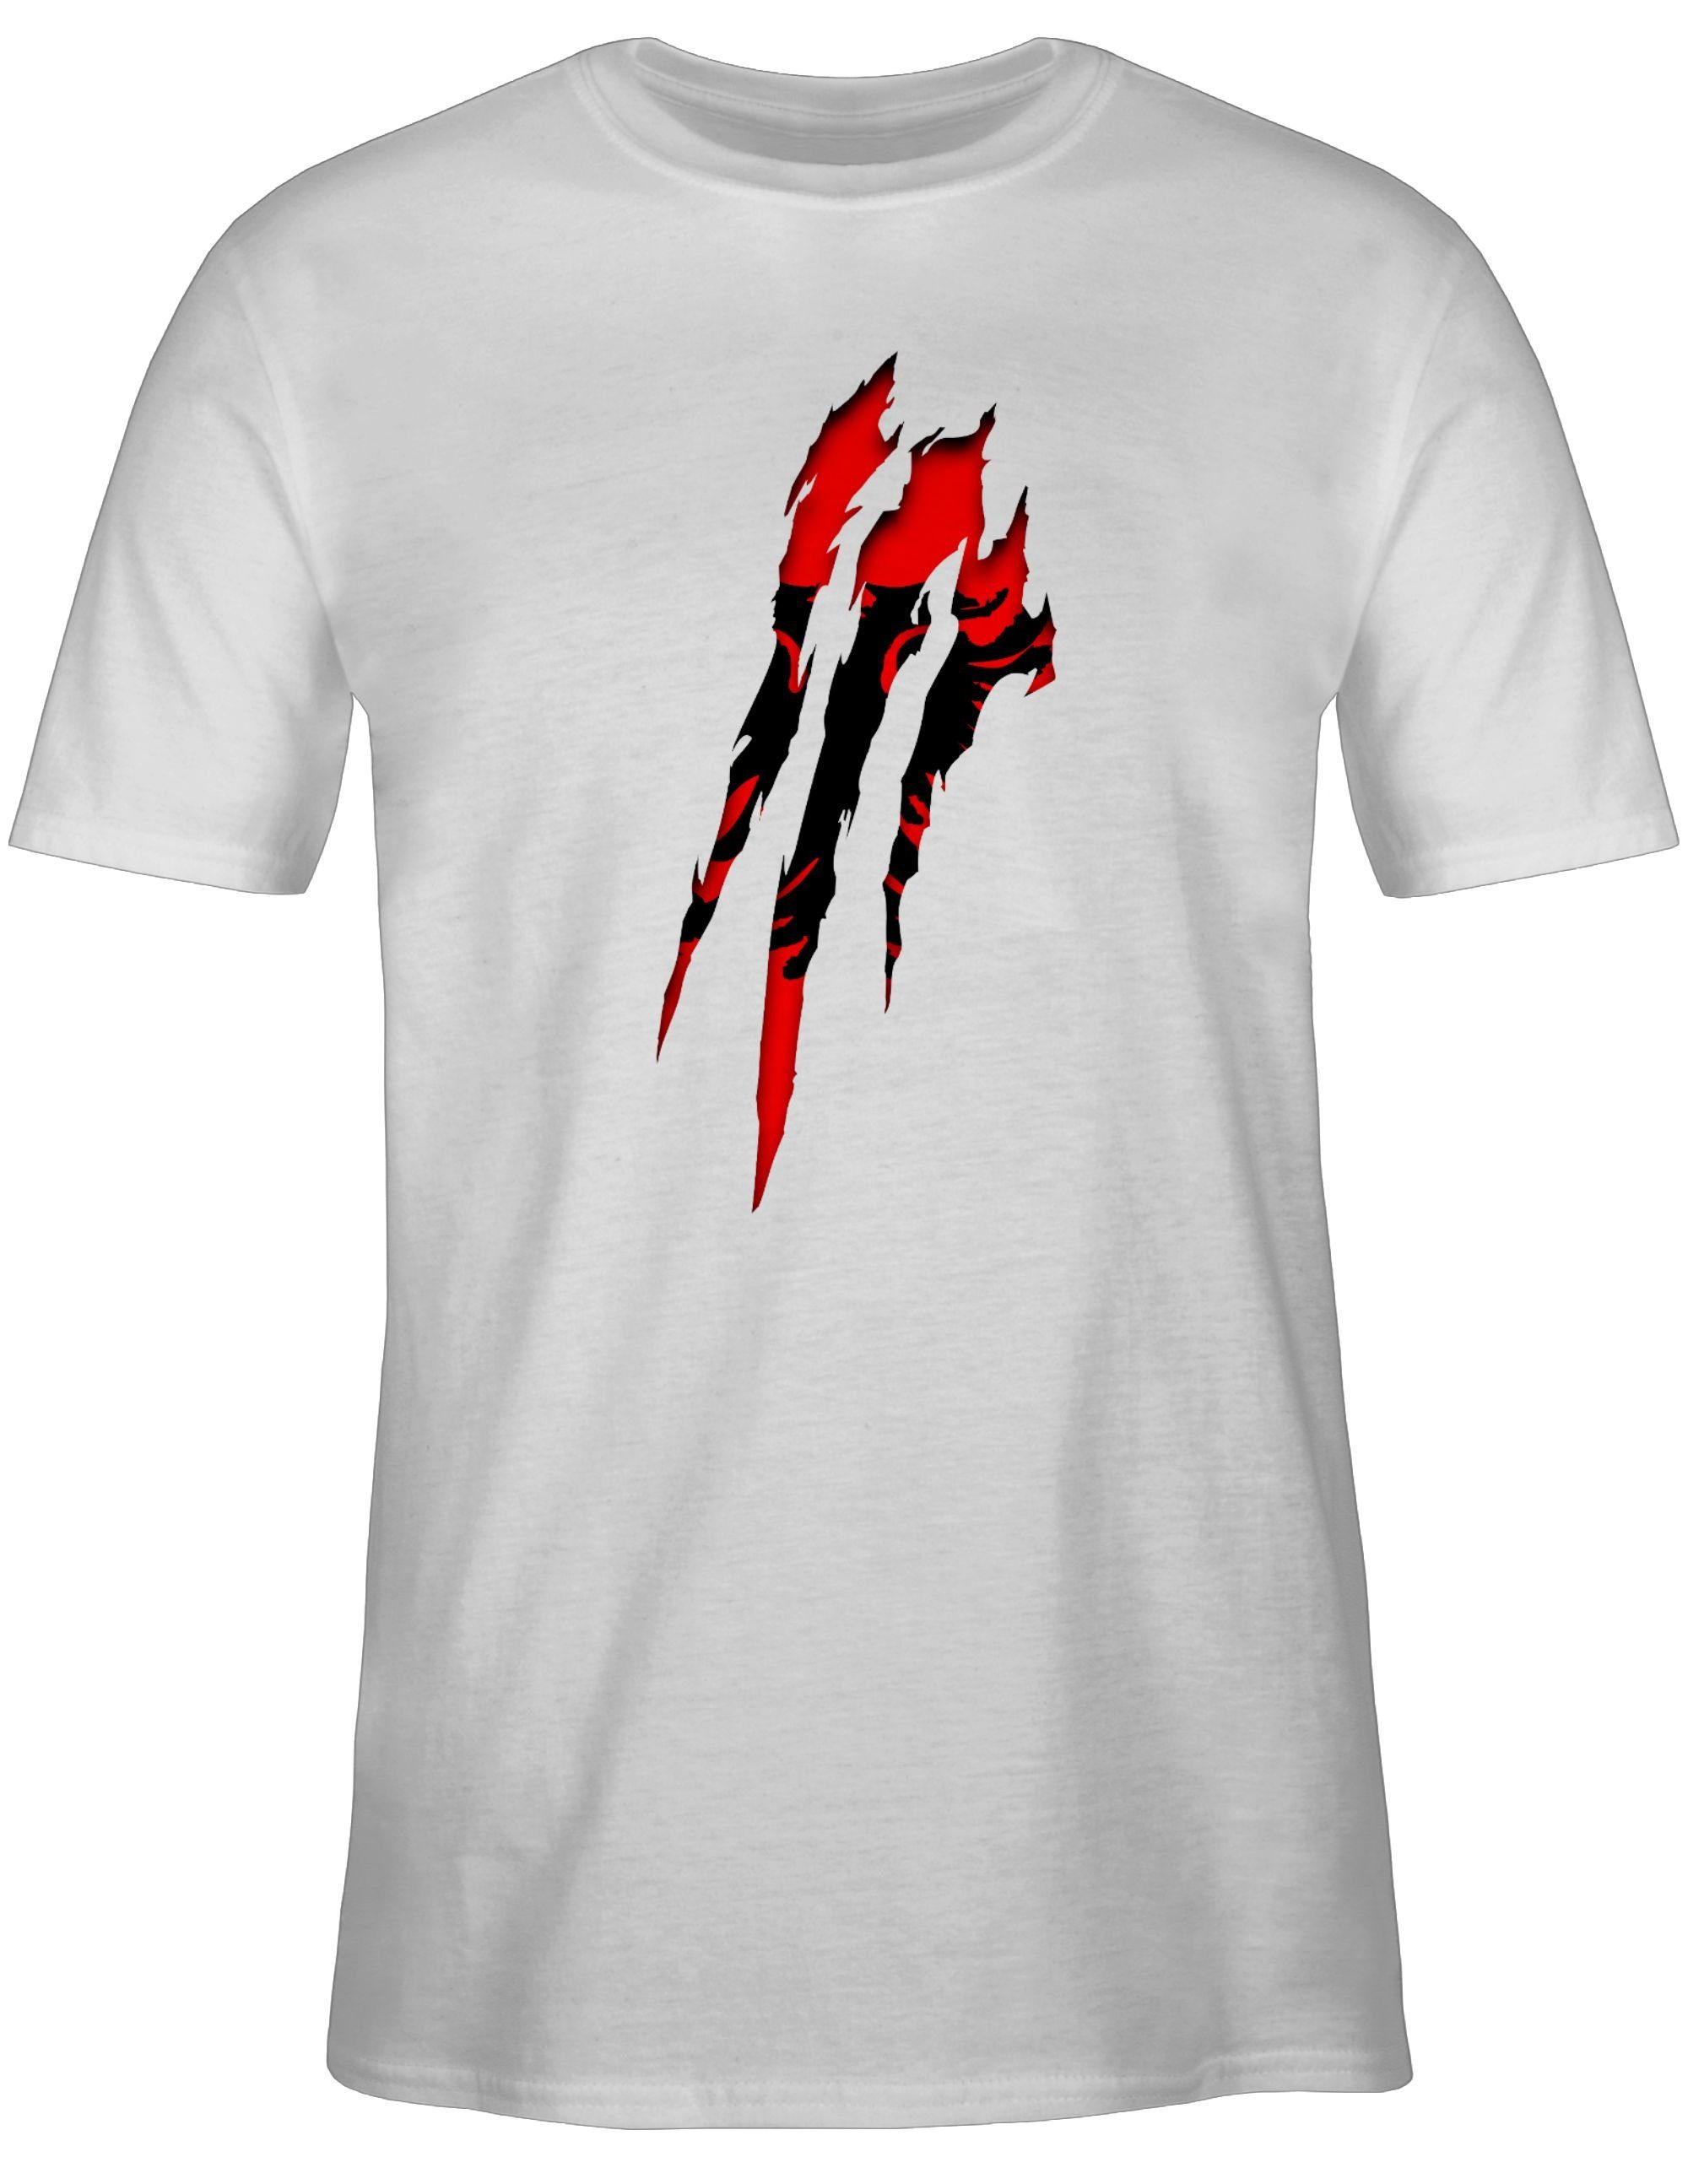 02 Albanien Wappen T-Shirt Krallenspuren Weiß Länder Shirtracer